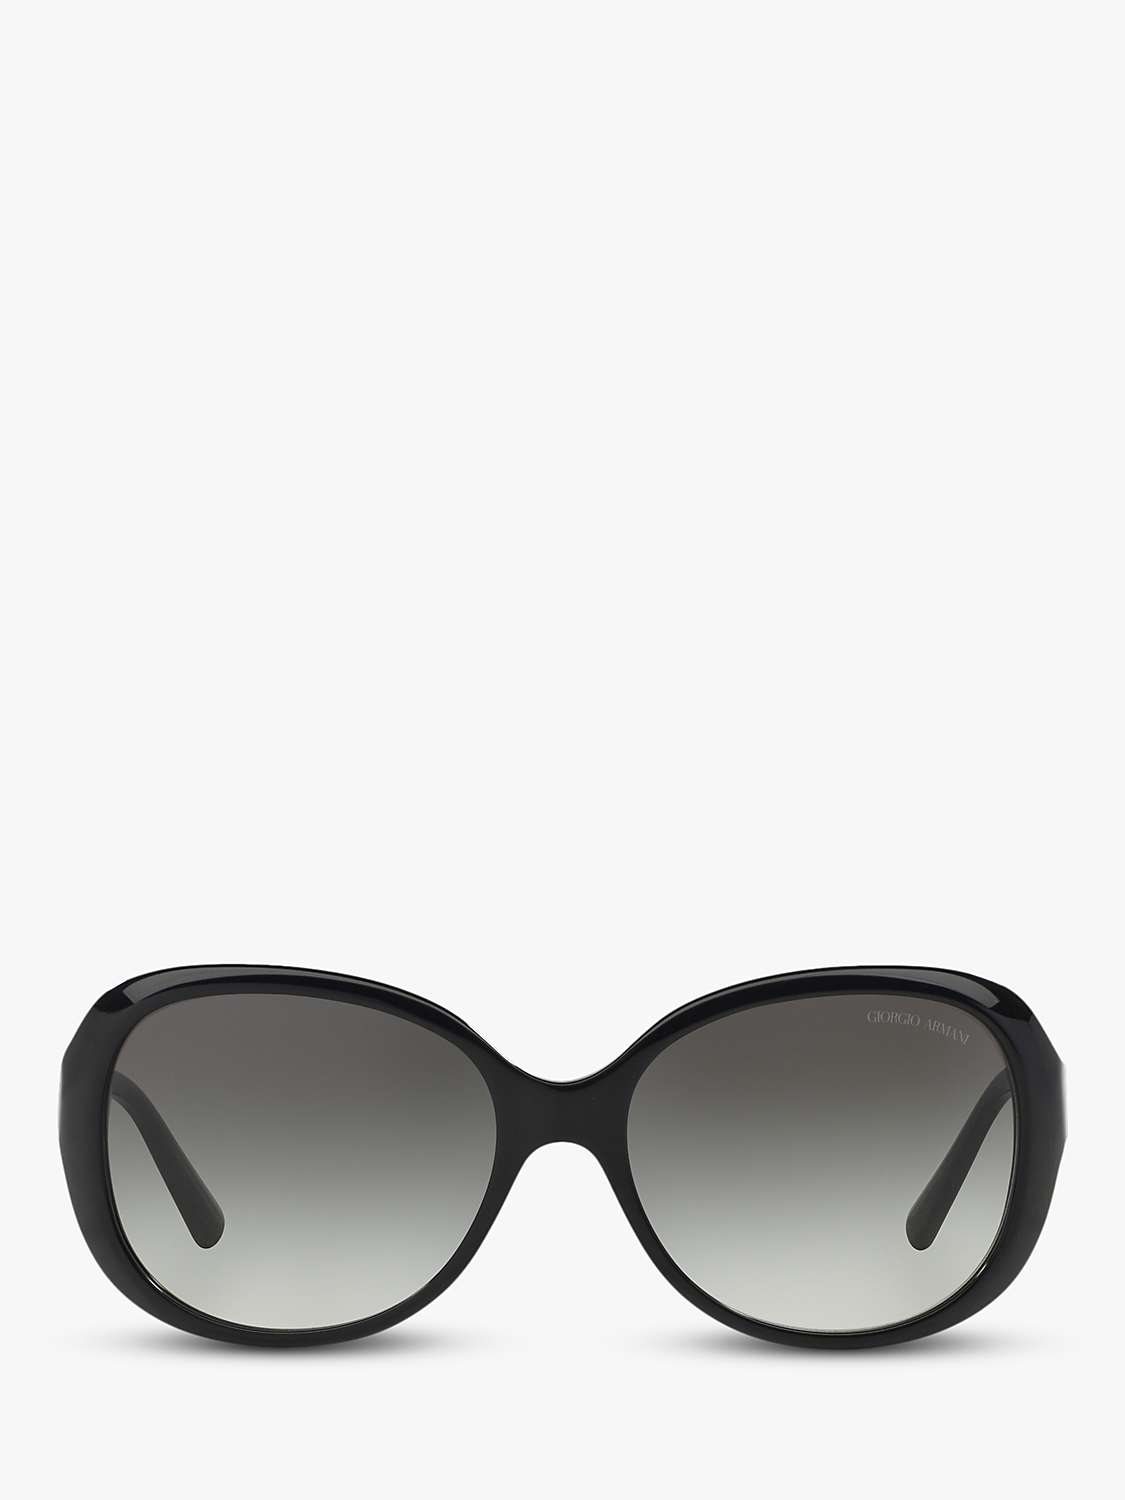 Buy Giorgio Armani AR8047 Women's Round Sunglasses Online at johnlewis.com